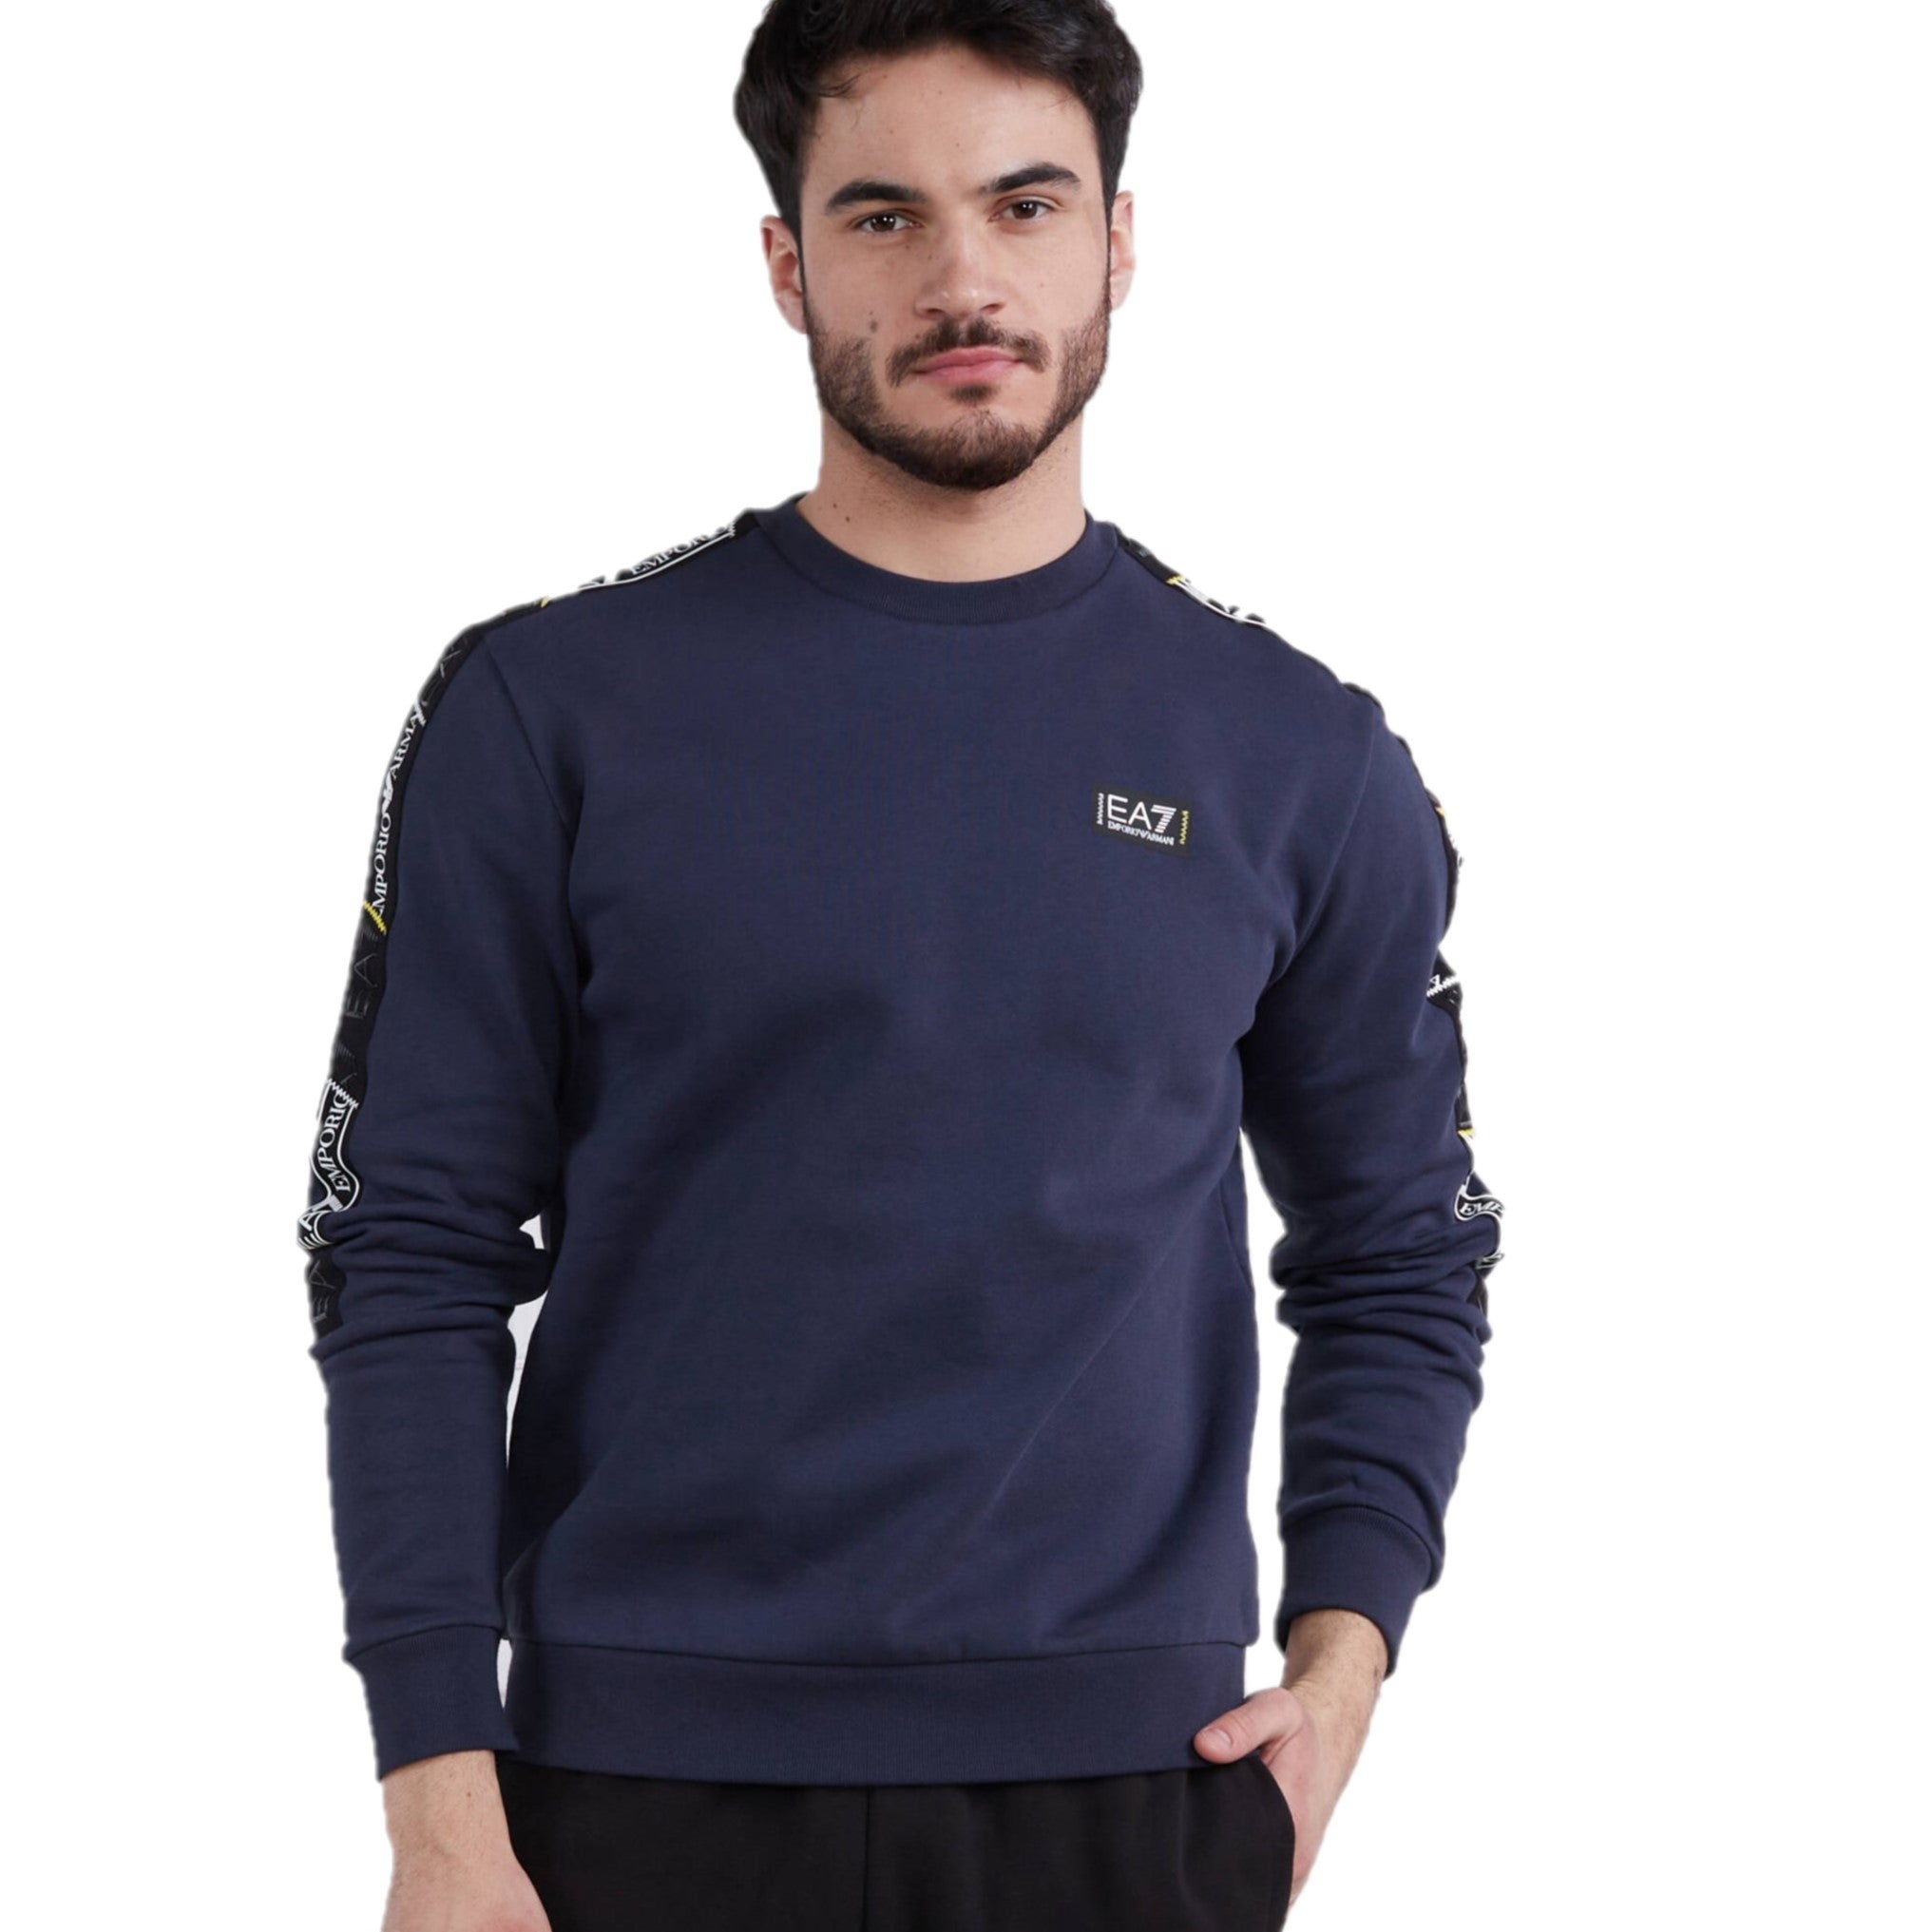 EA7 Giorgio Armani - Man Jersey Sweatshirt - Navy Blue